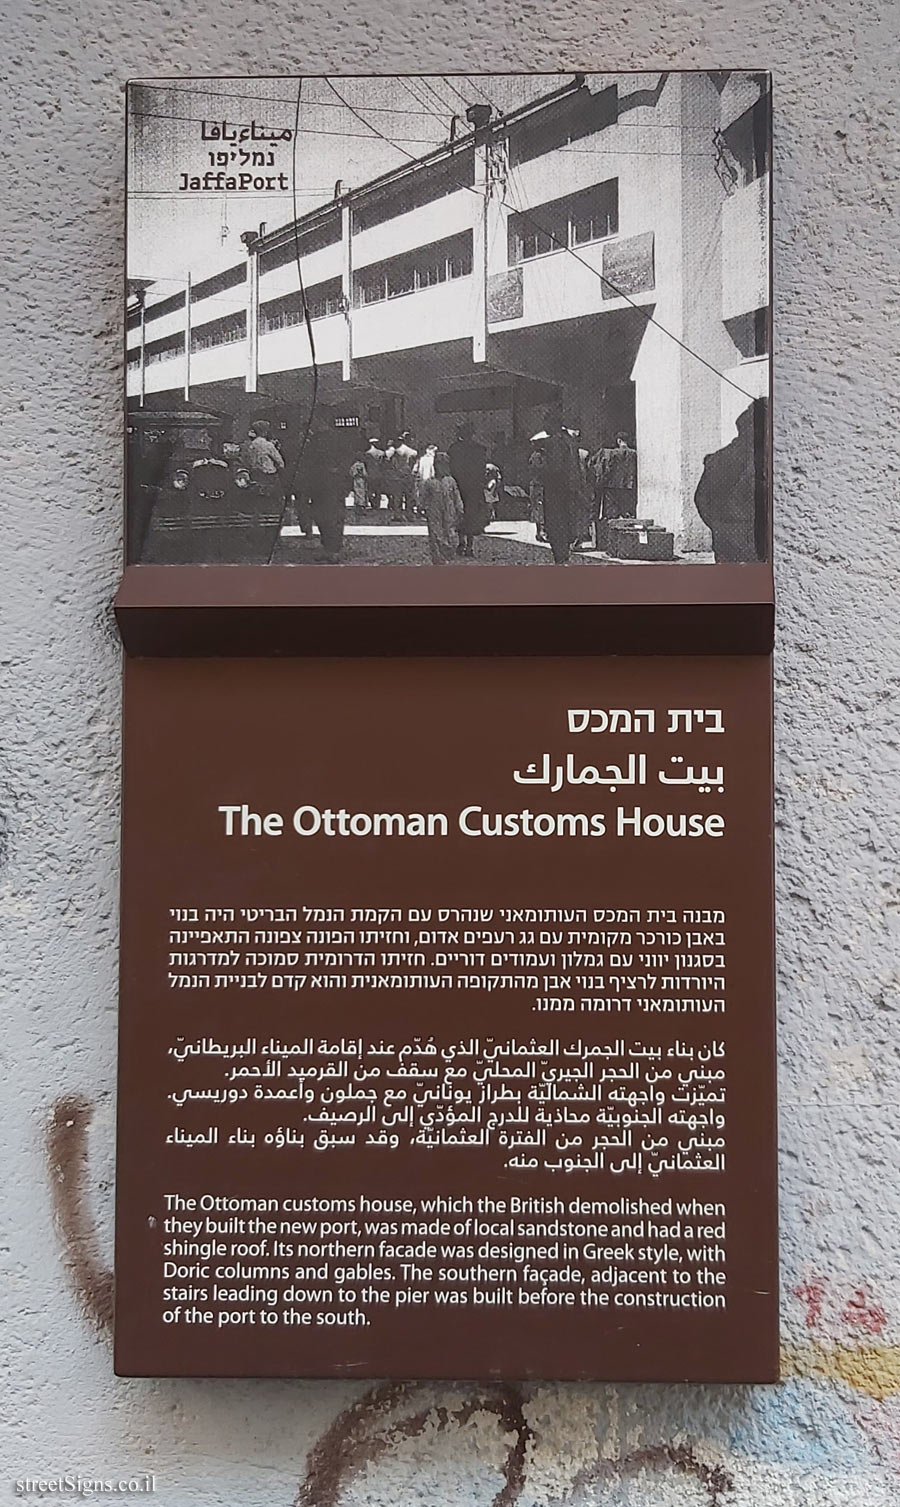 Tel Aviv - Jaffa Port - The Ottoman Customs House